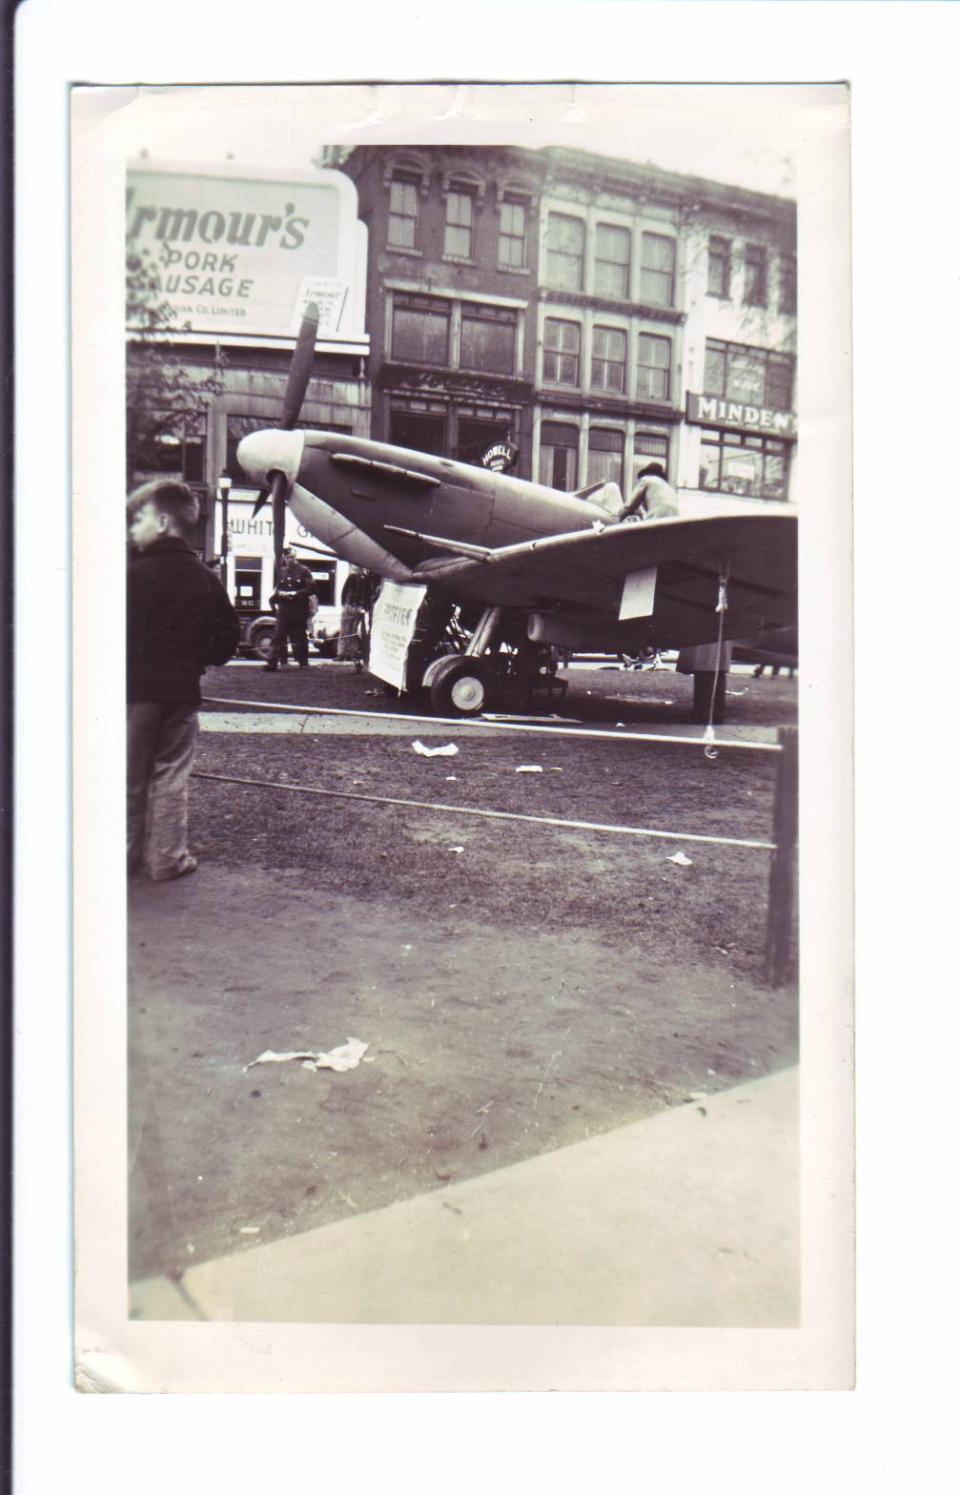 Photo #102
Display of an Airplane (2) 
London, England